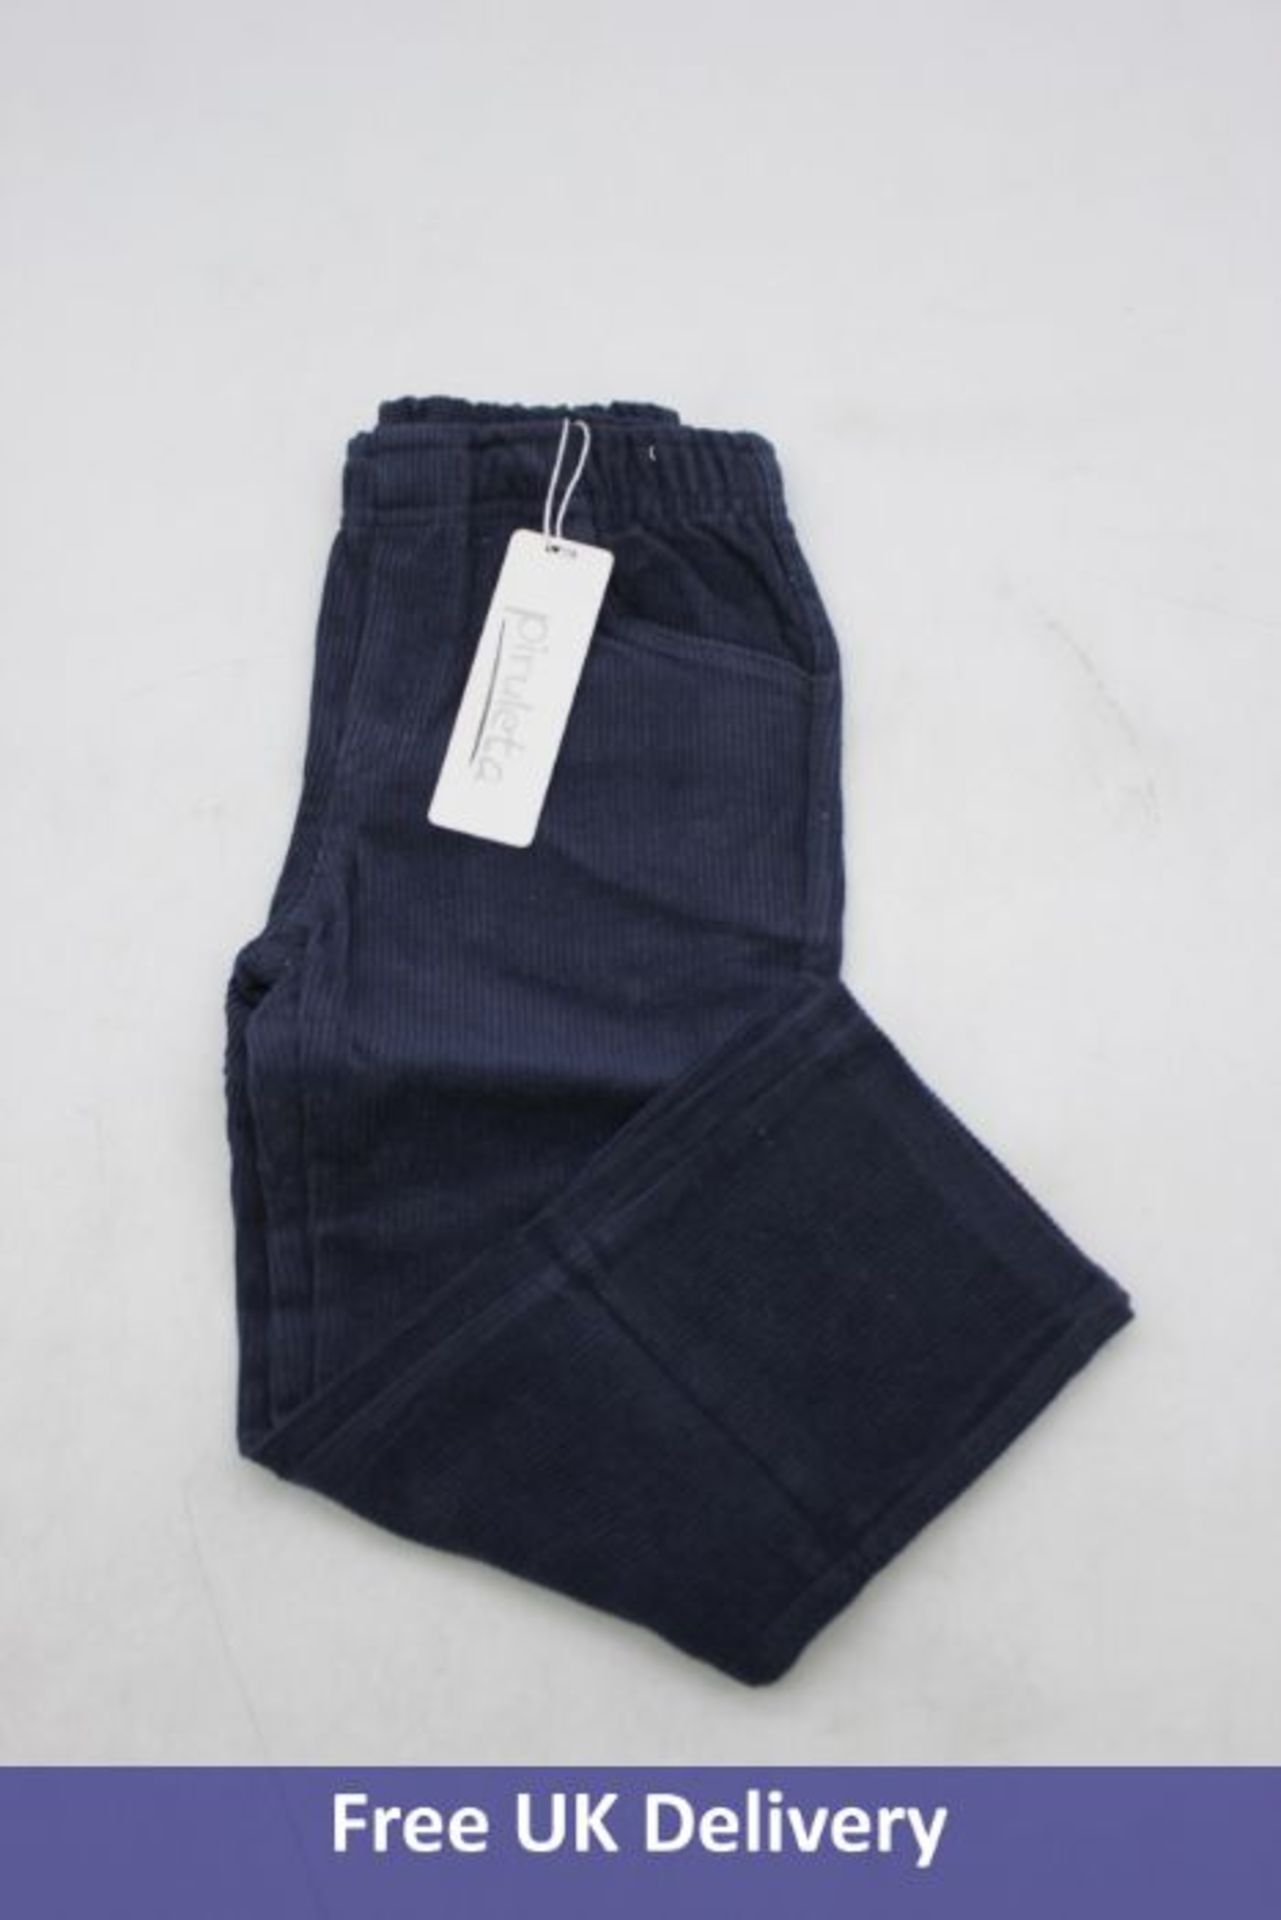 Sixteen Piruleta Soft Children's Trousers, Dark Blue, 6x UK 12 Months, 5x UK 18 Months, 5x UK 2-3 Ye - Image 2 of 3